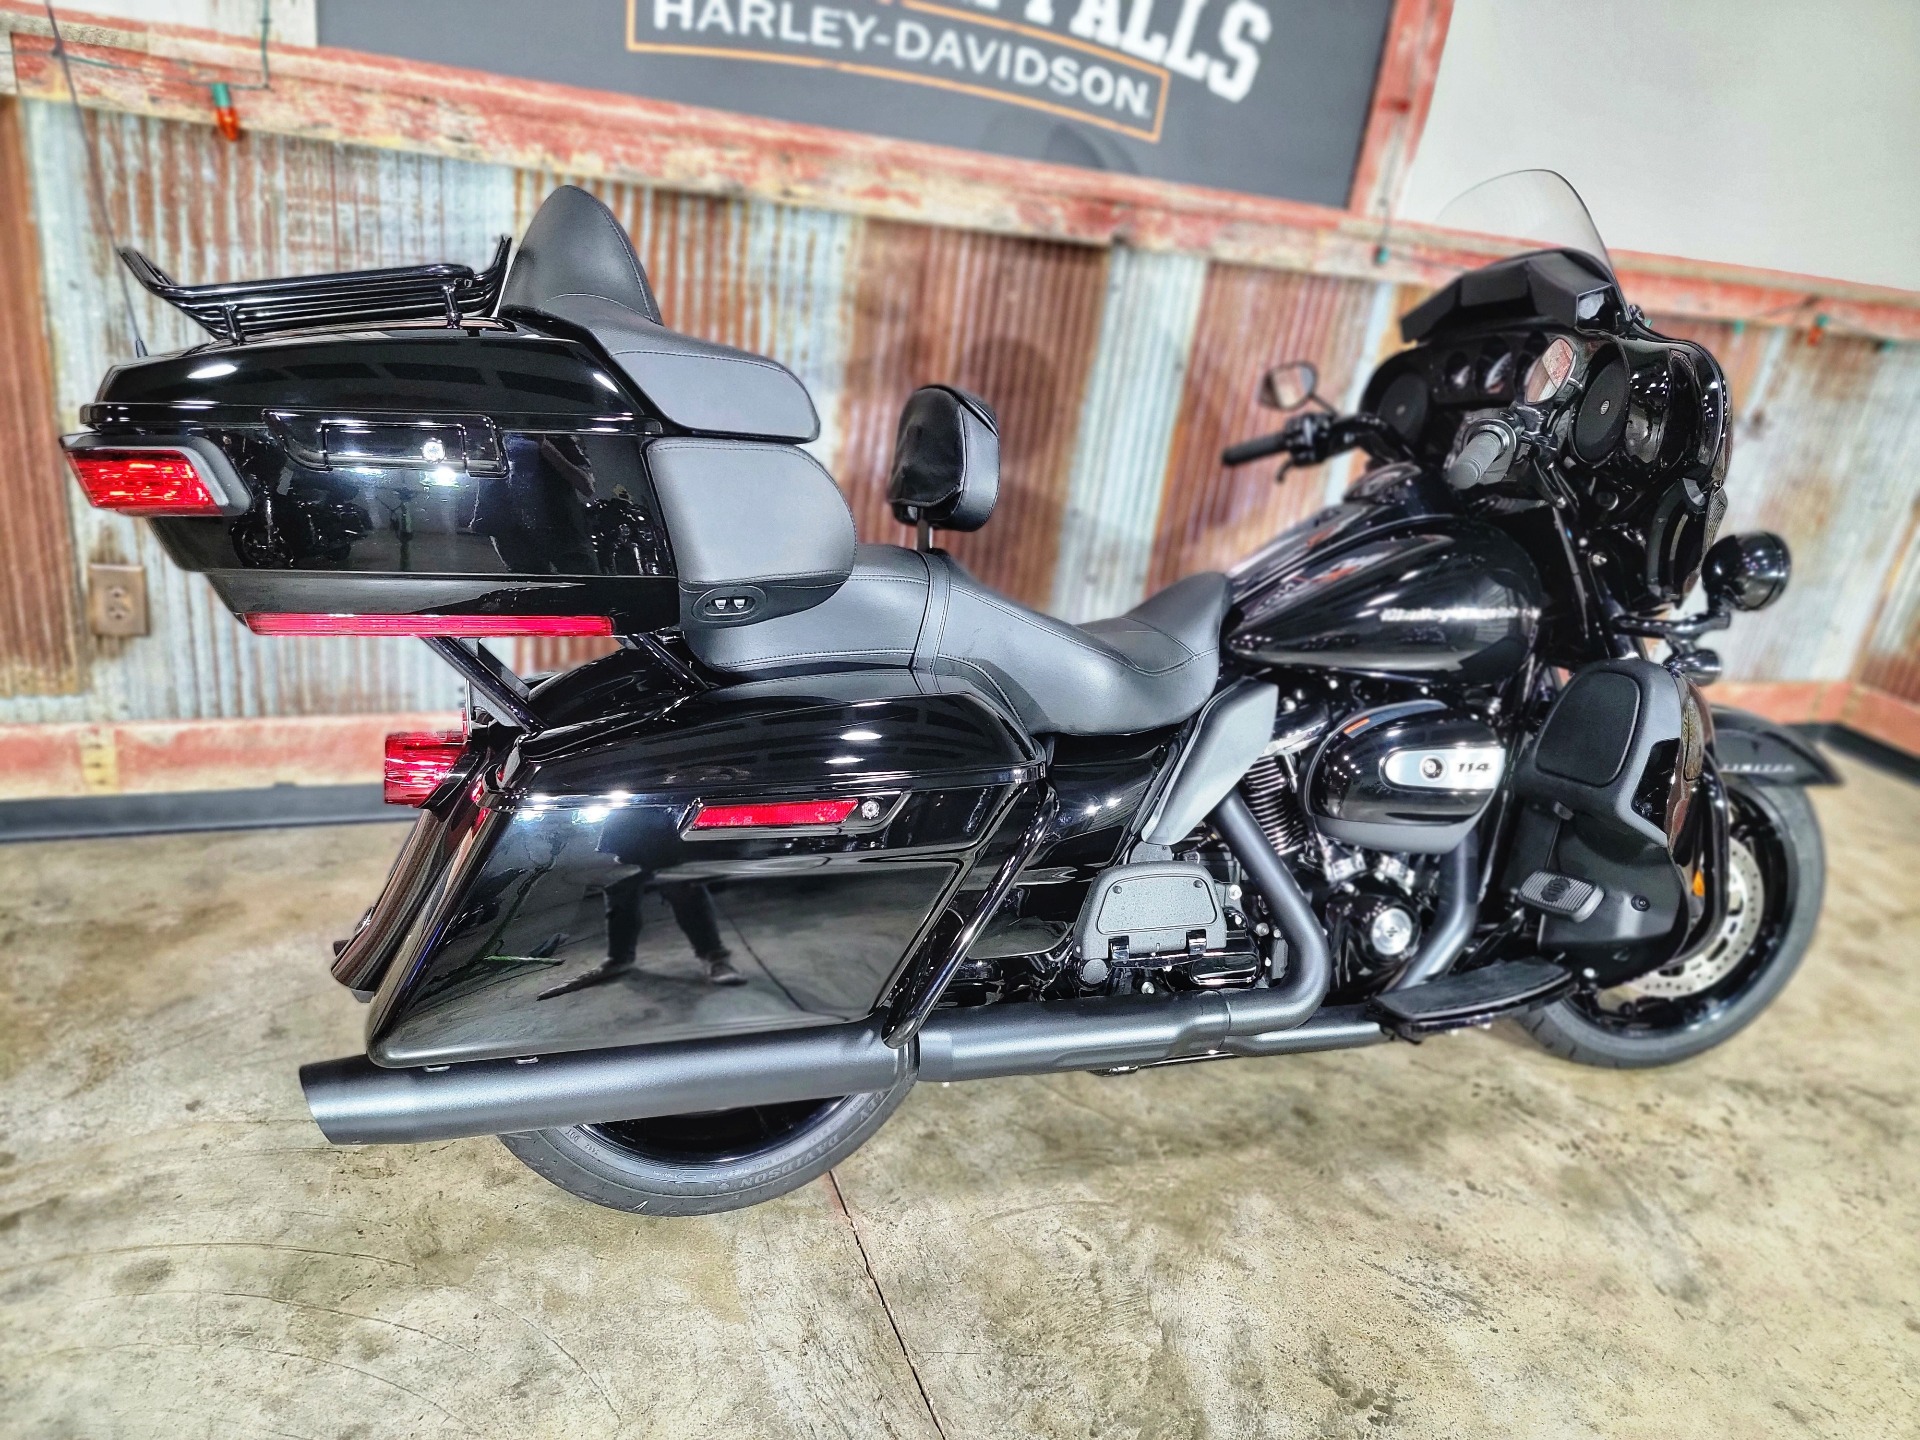 2021 Harley-Davidson Ultra Limited in Chippewa Falls, Wisconsin - Photo 4